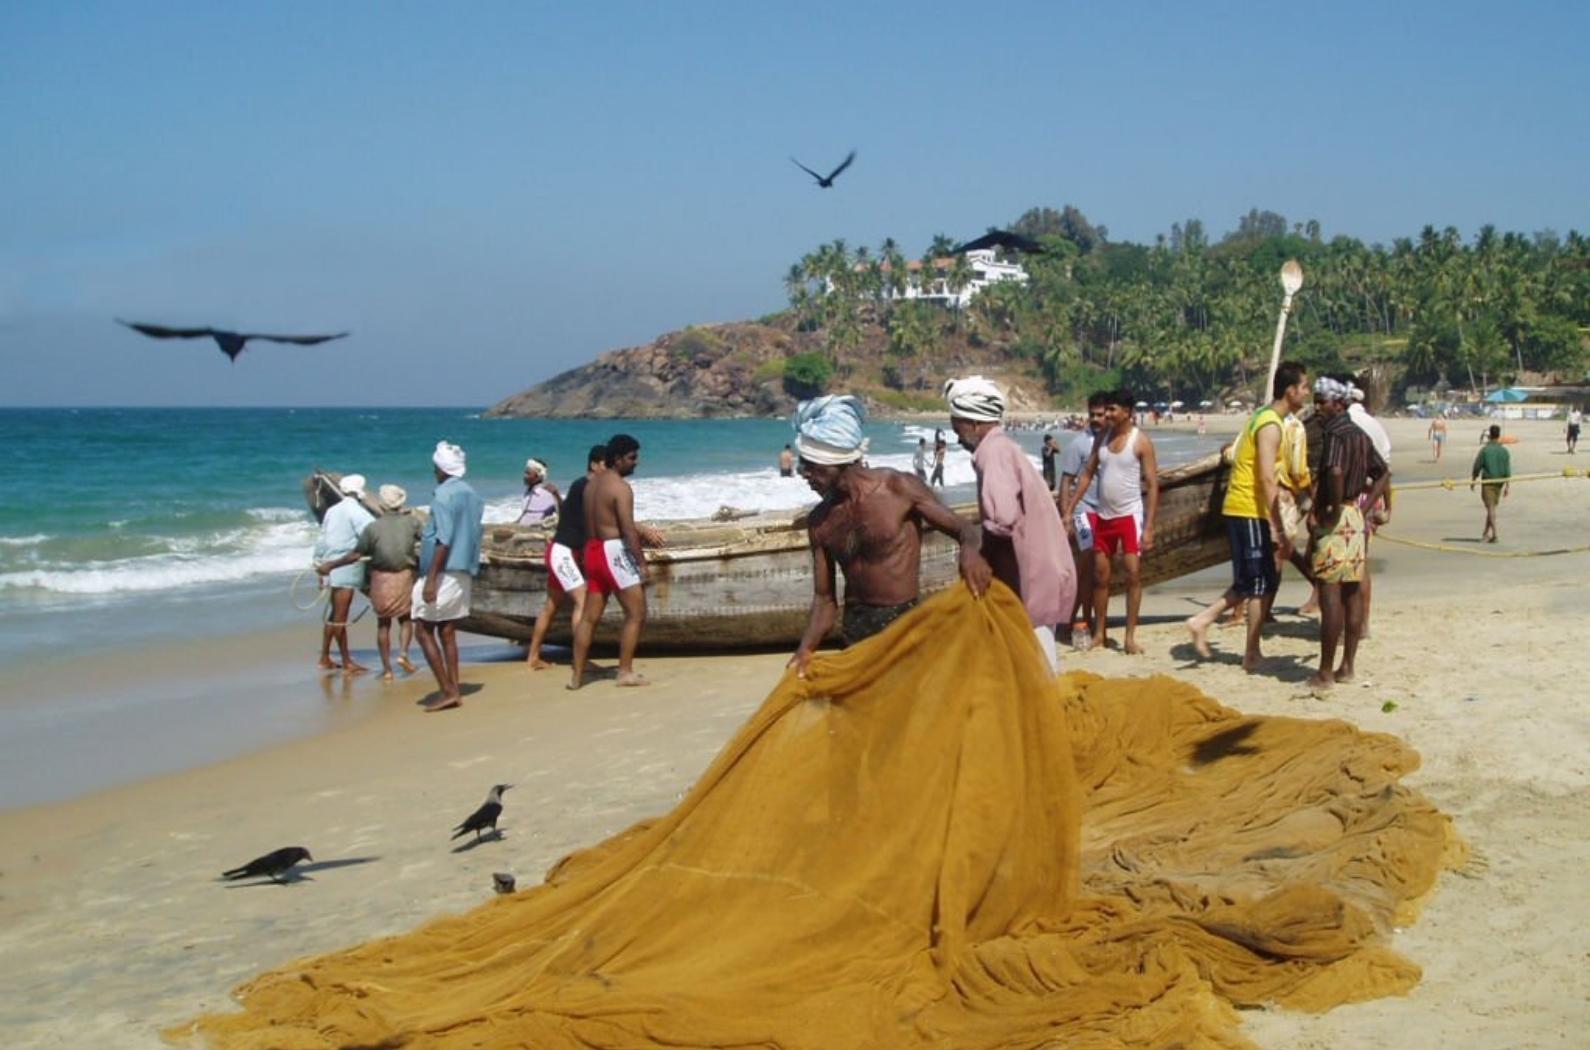 Fishermen mending Nets in Kovalam Beach.